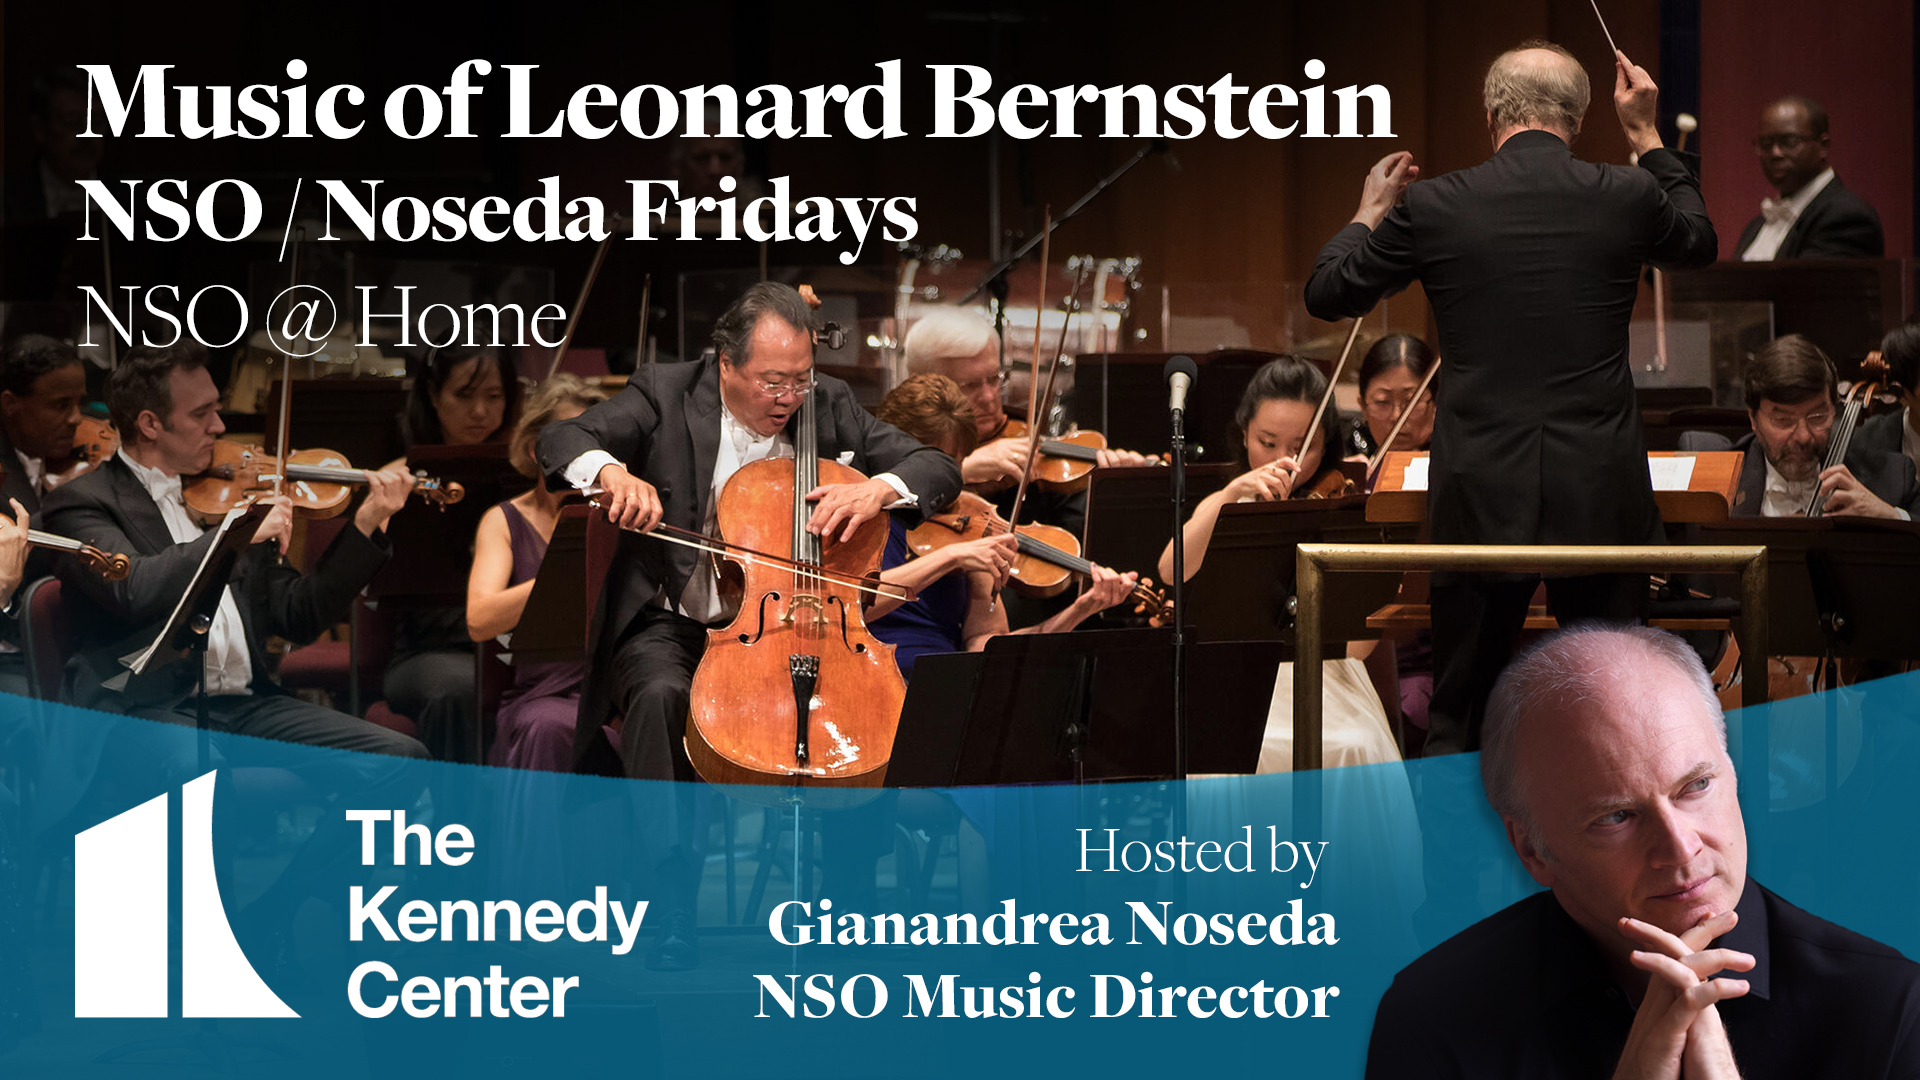 NSO/Noseda Fridays: Music of Leonard Bernstein